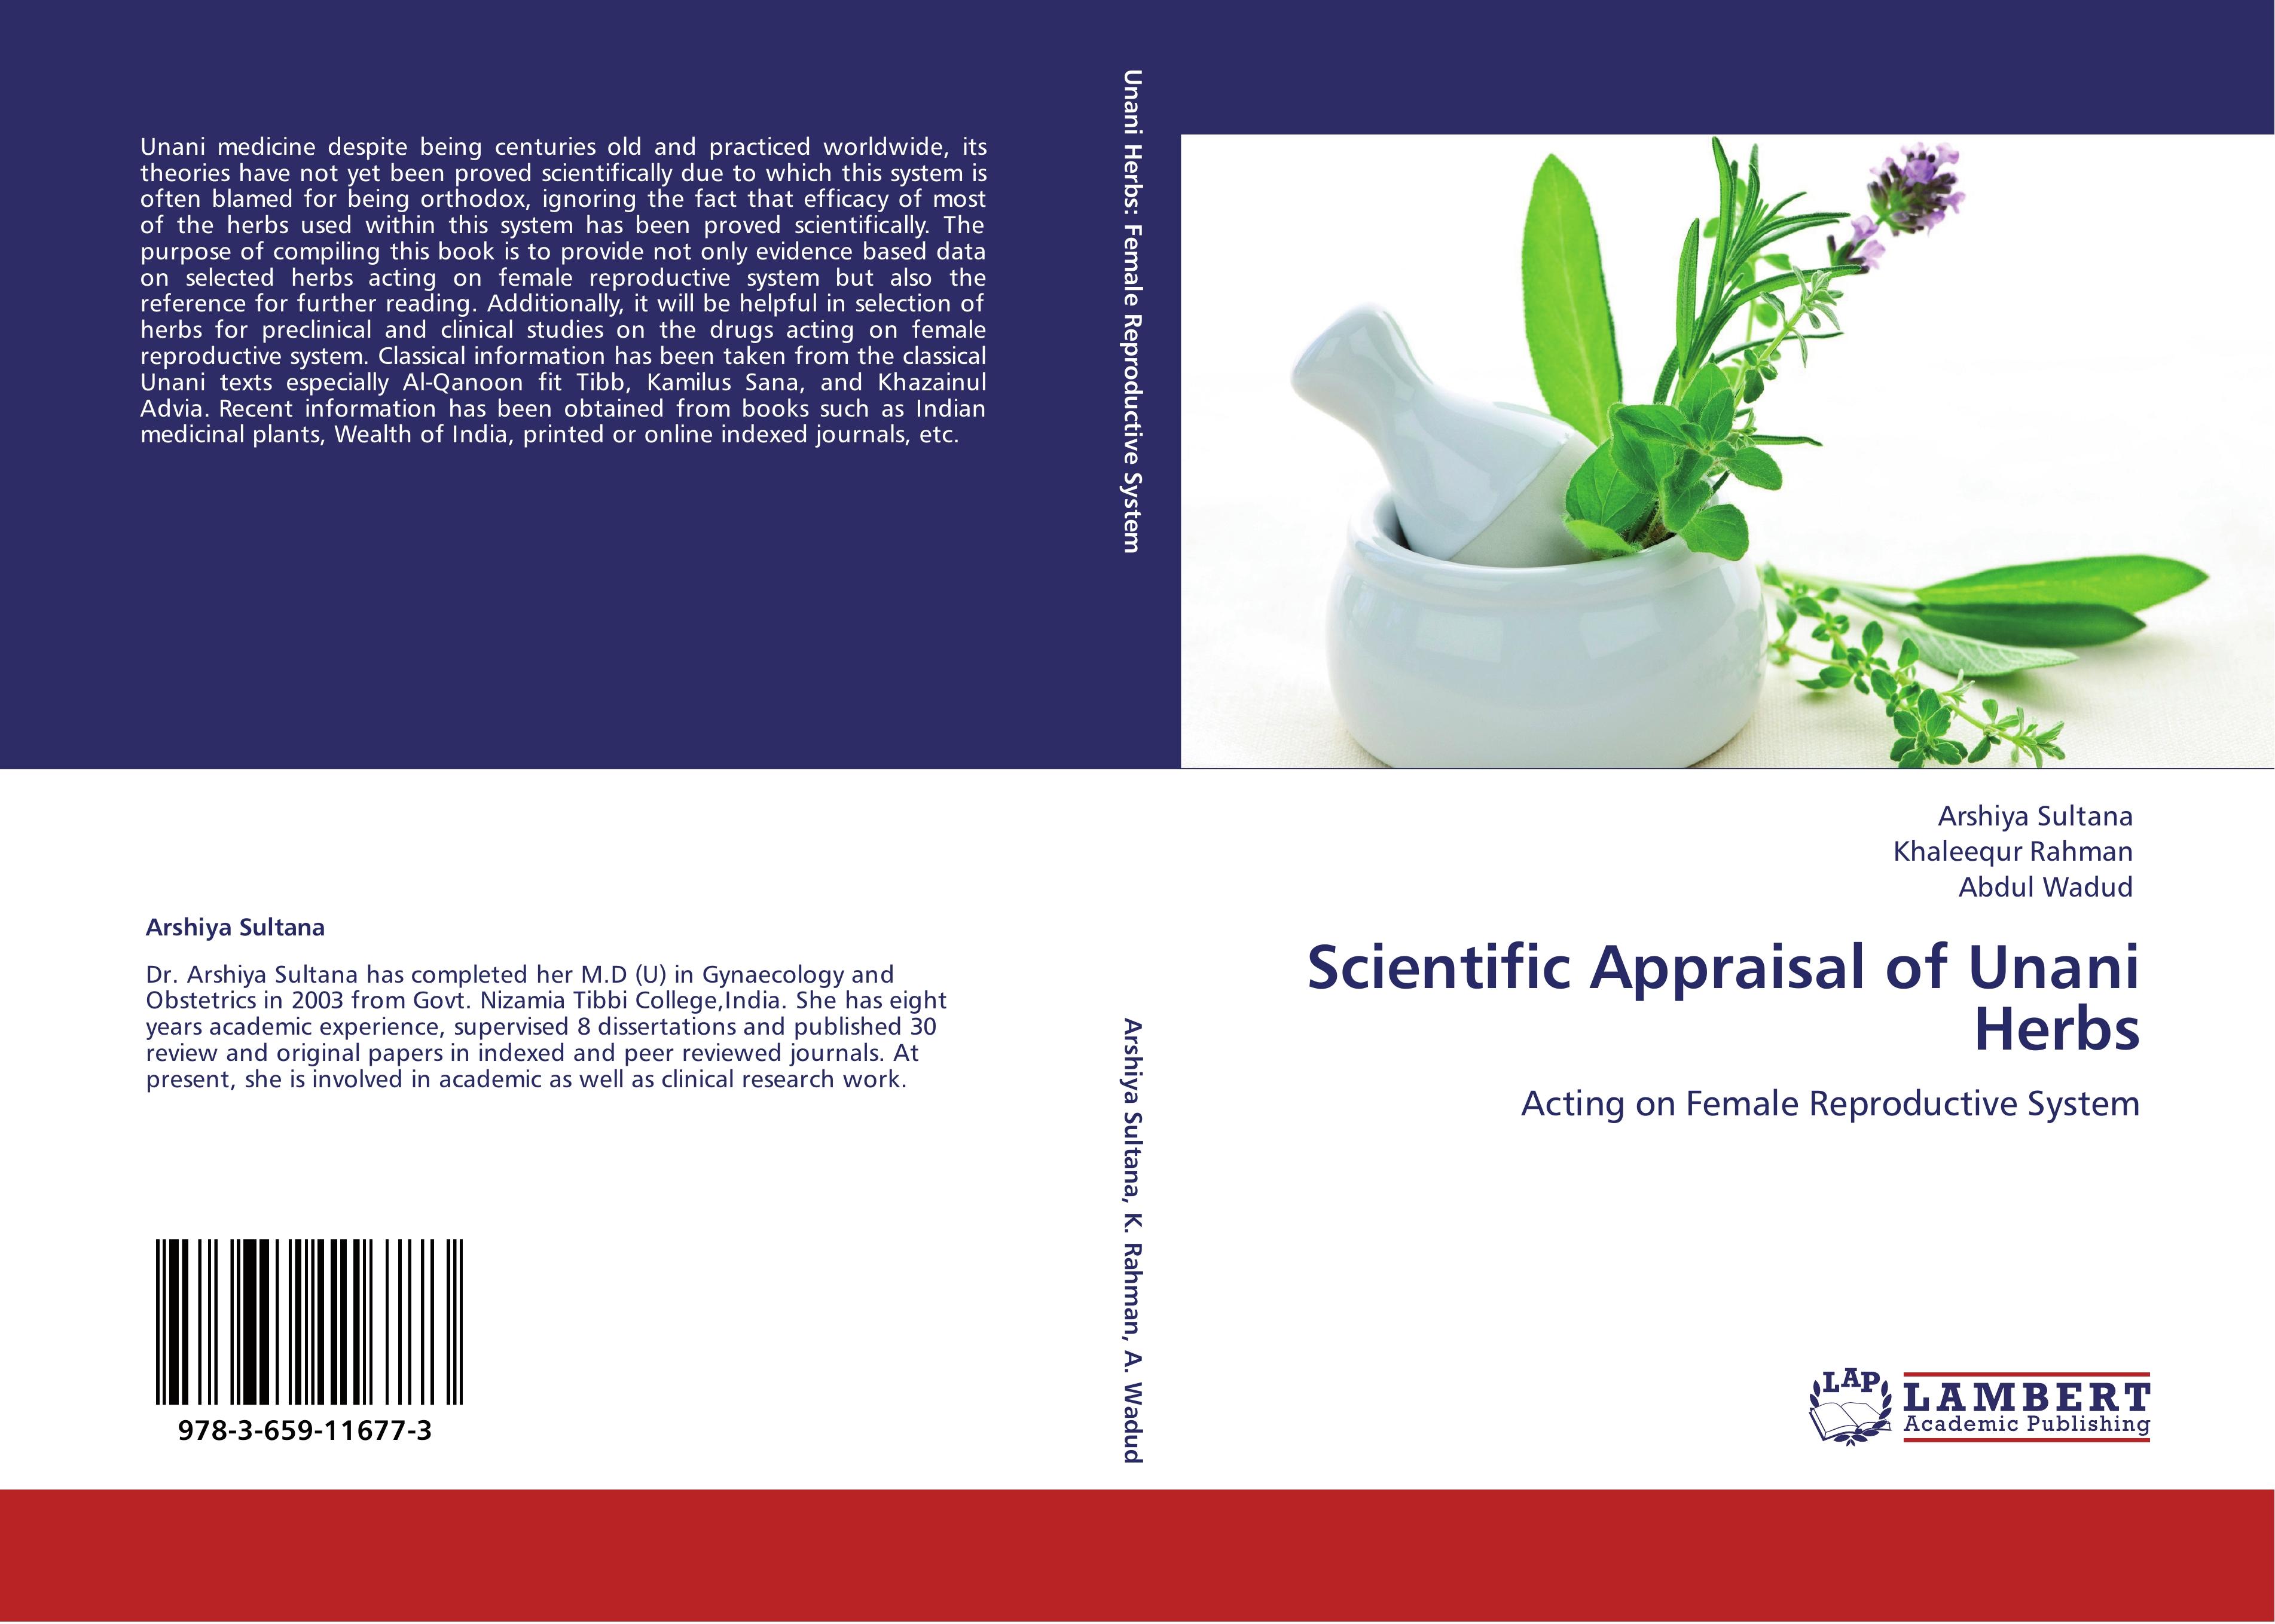 Scientific Appraisal of Unani Herbs - Arshiya Sultana Khaleequr Rahman Abdul Wadud